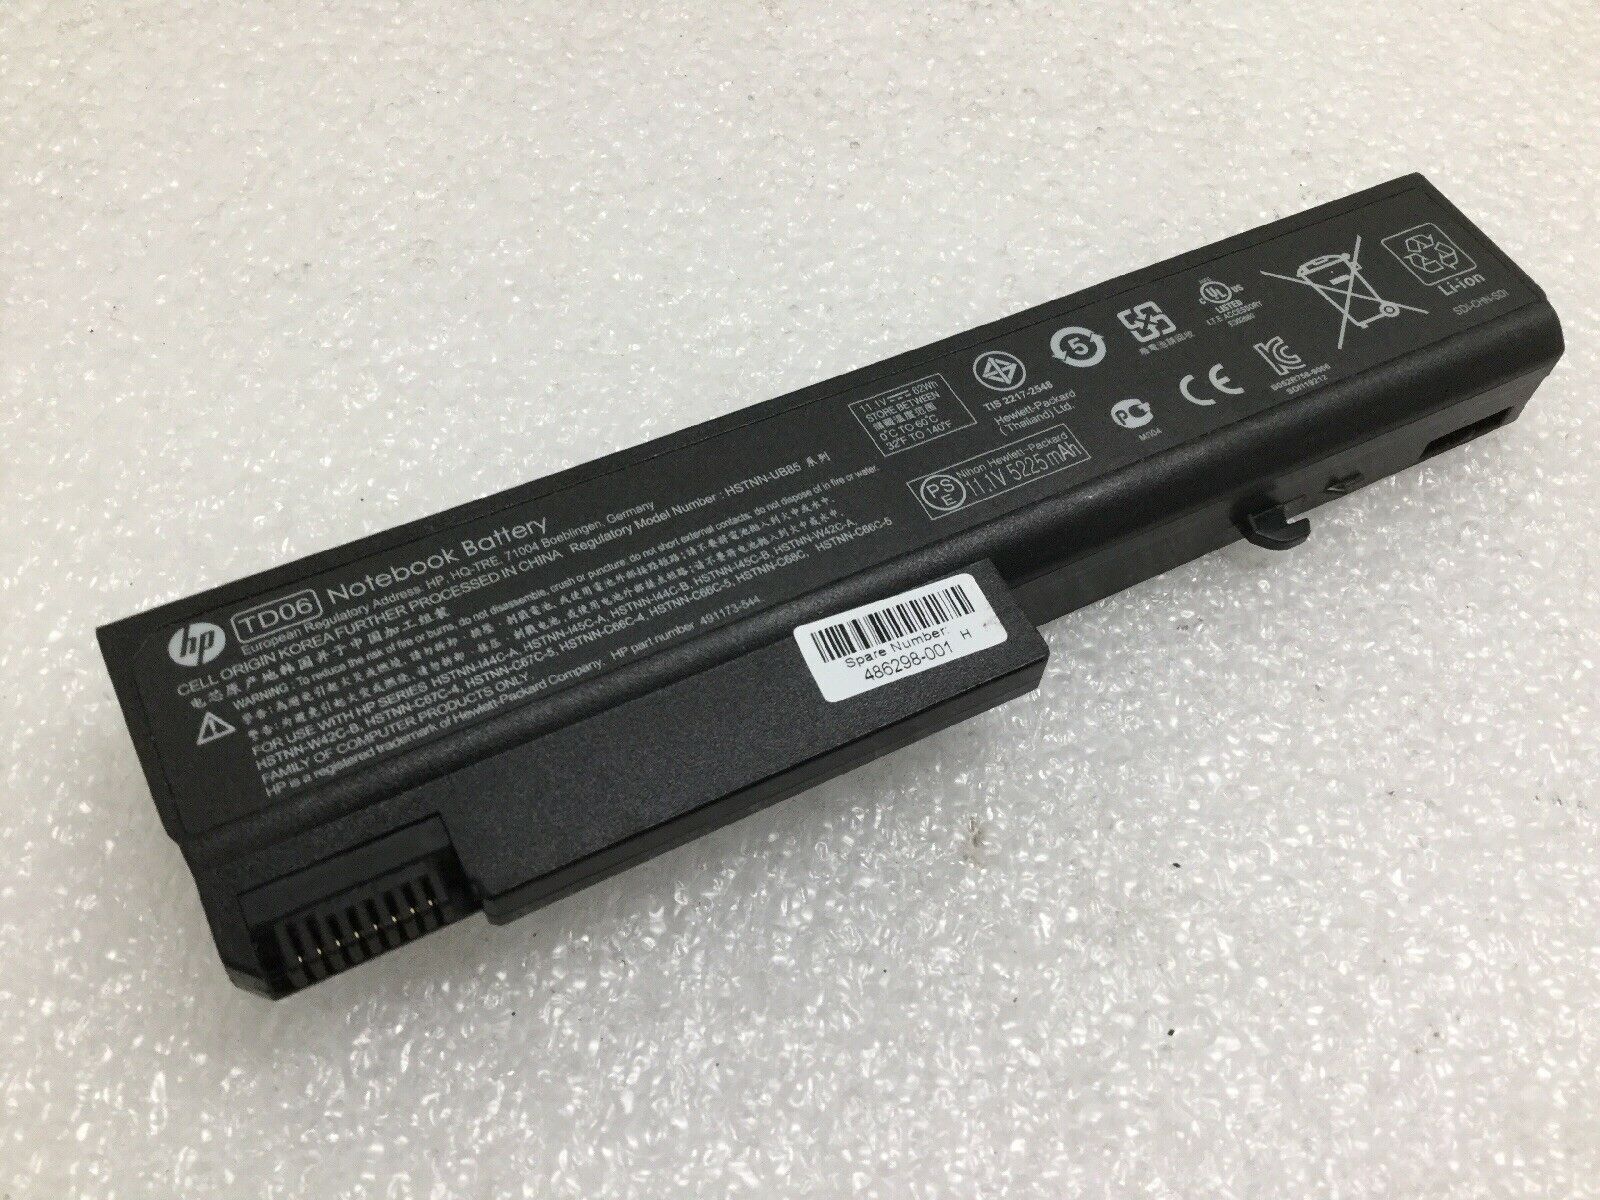 Genuine HP Battery TD06 for HP EliteBook 8440P 8440W 6930p 6530b 6535b 6730b